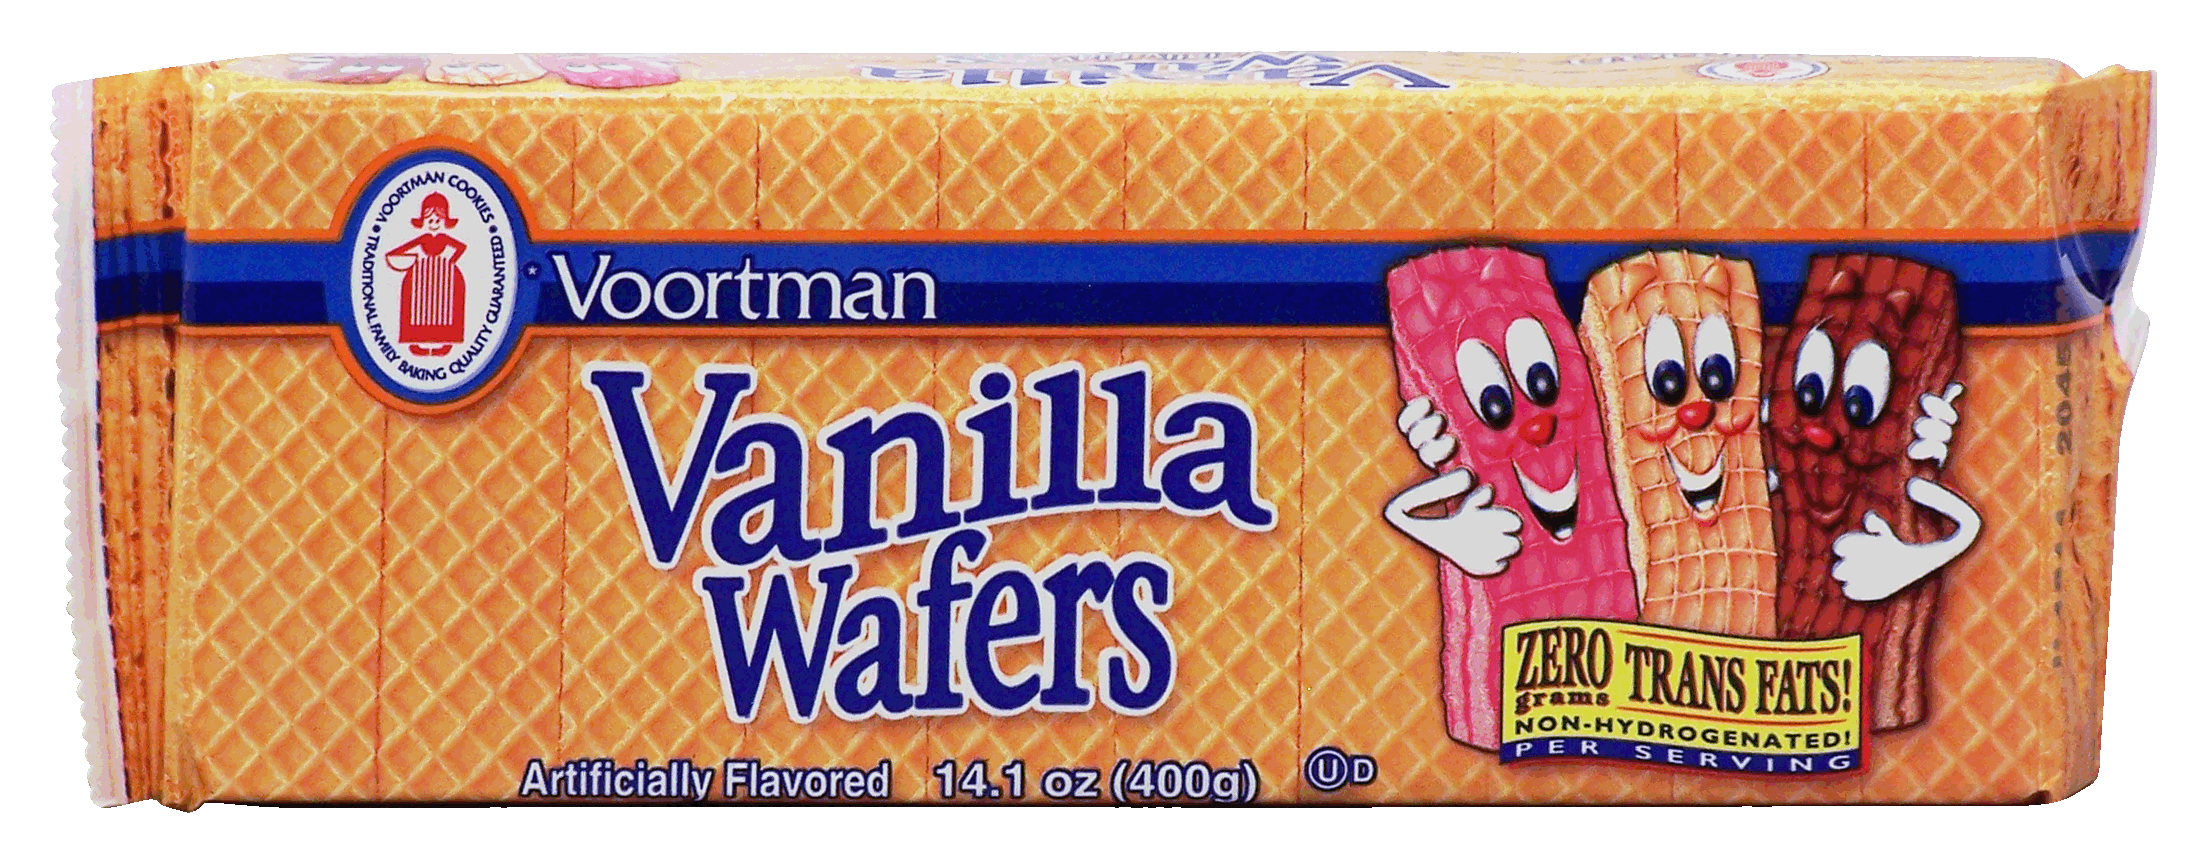 Voortman  vanilla wafers Full-Size Picture